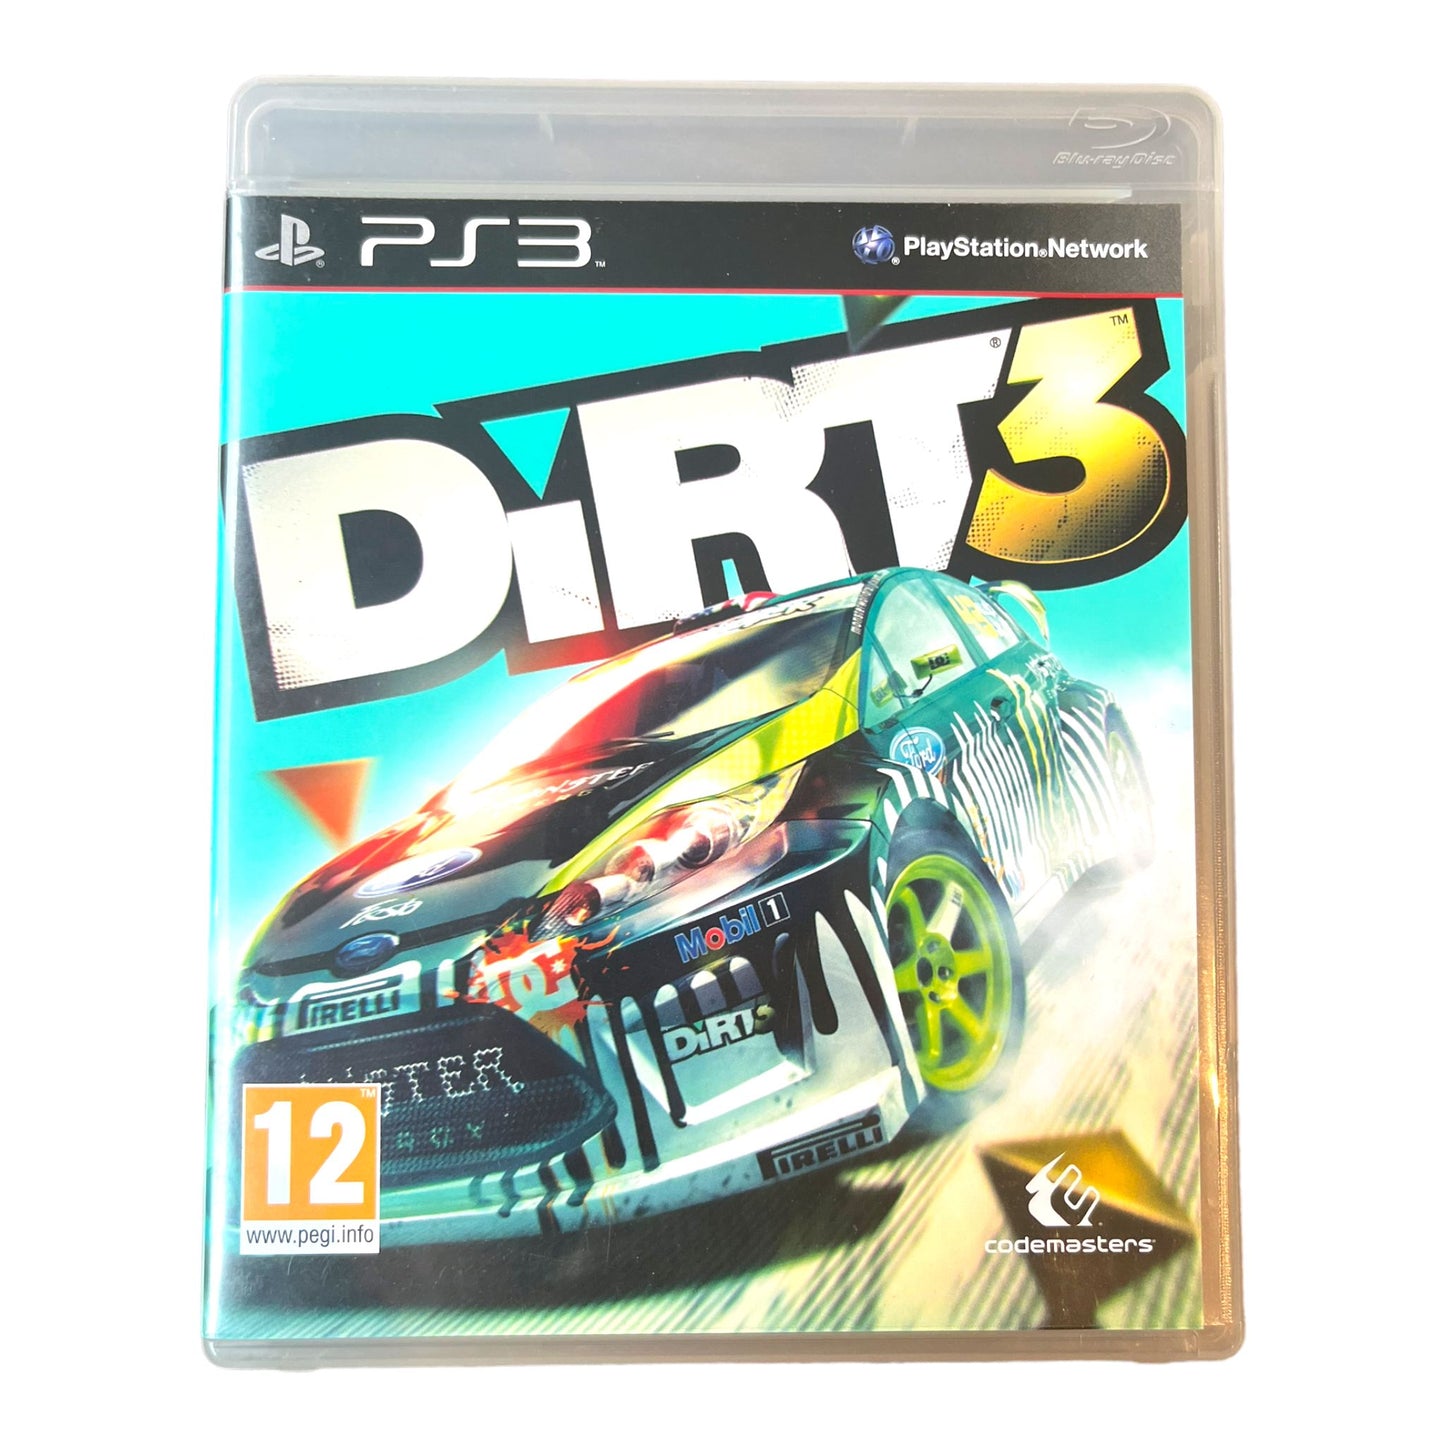 Dirt 3